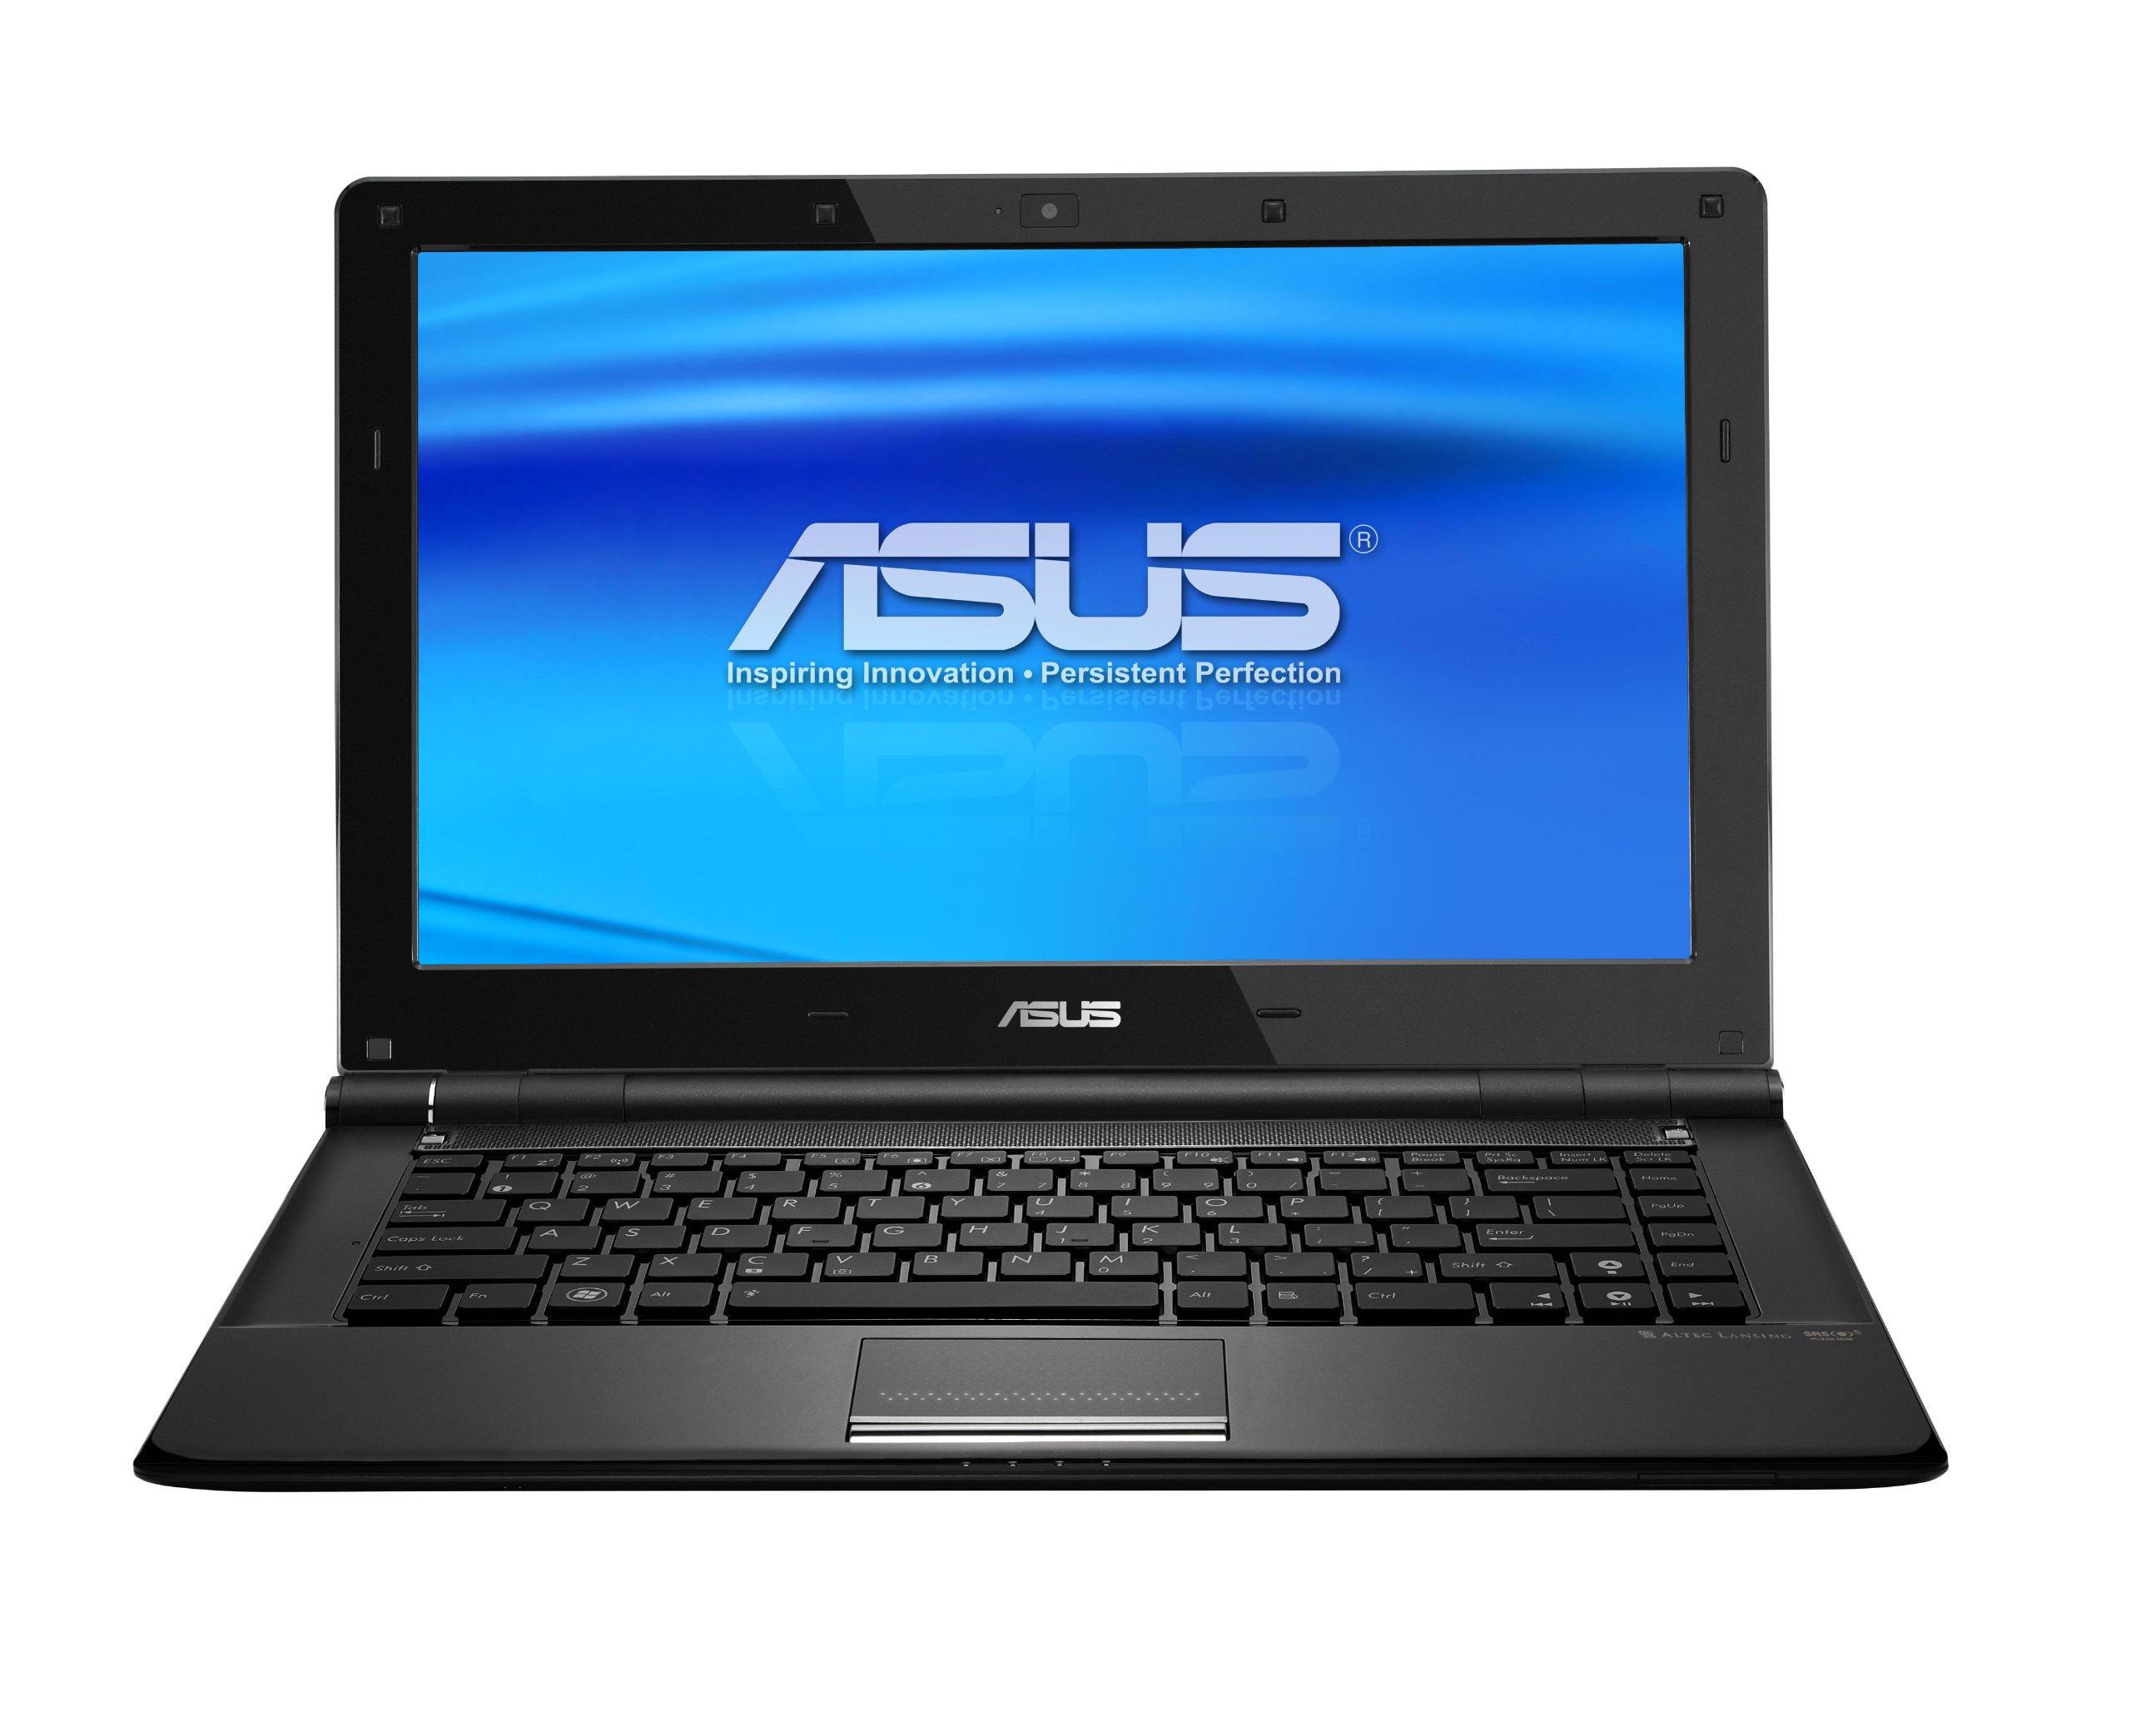 ASUS U80V-B2 Thin and Light 14-Inch Laptop (Black)